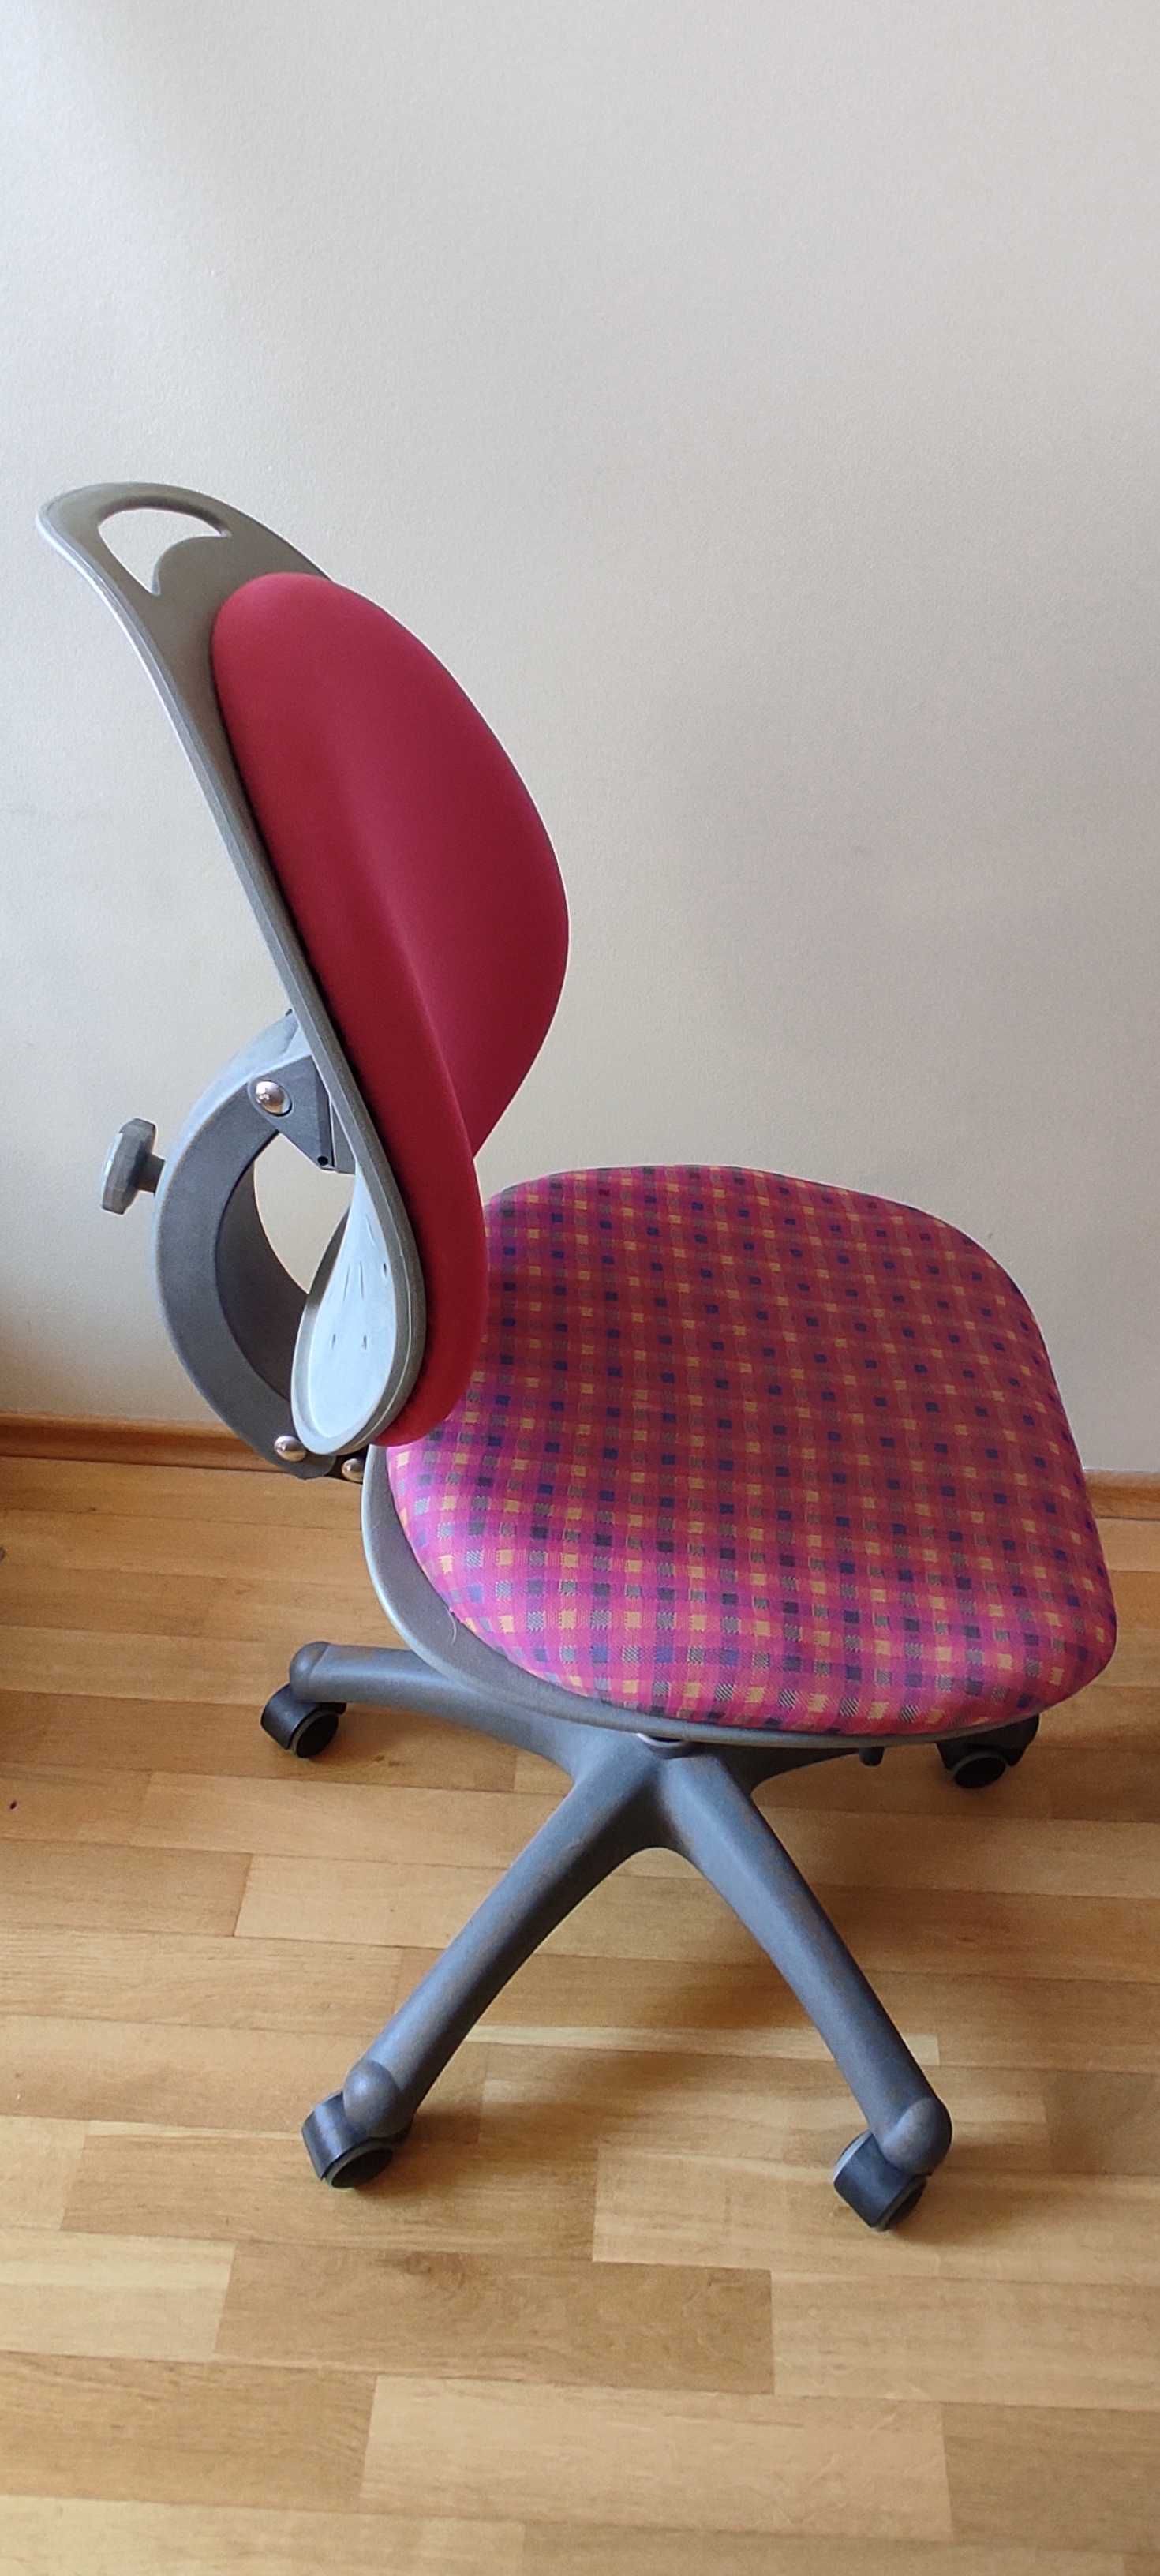 Krzesło biurkowe Kettler